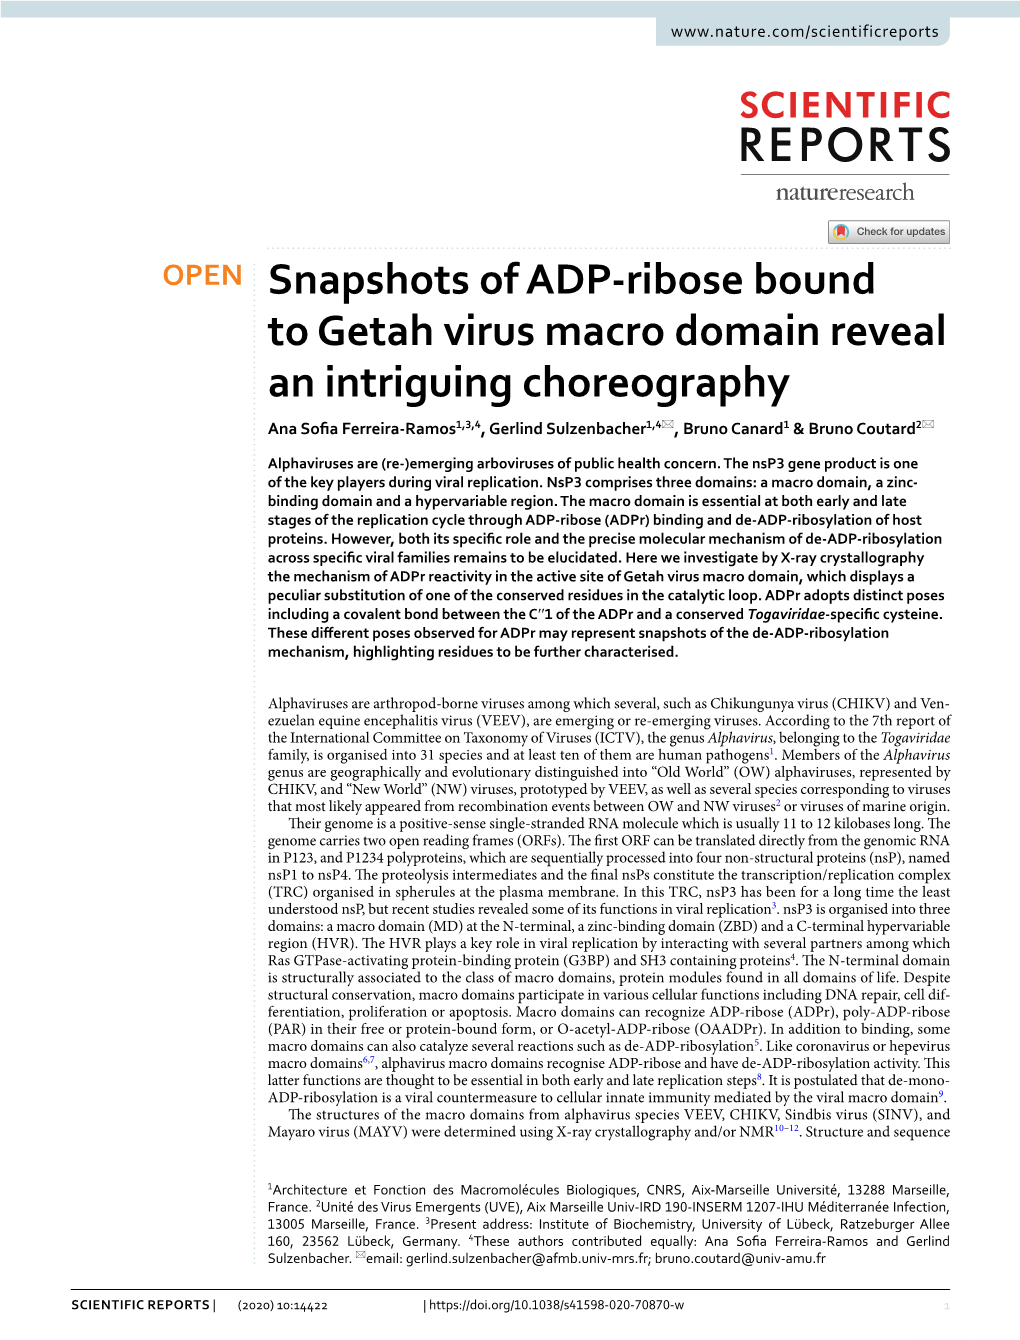 Snapshots of ADP-Ribose Bound to Getah Virus Macro Domain Reveal